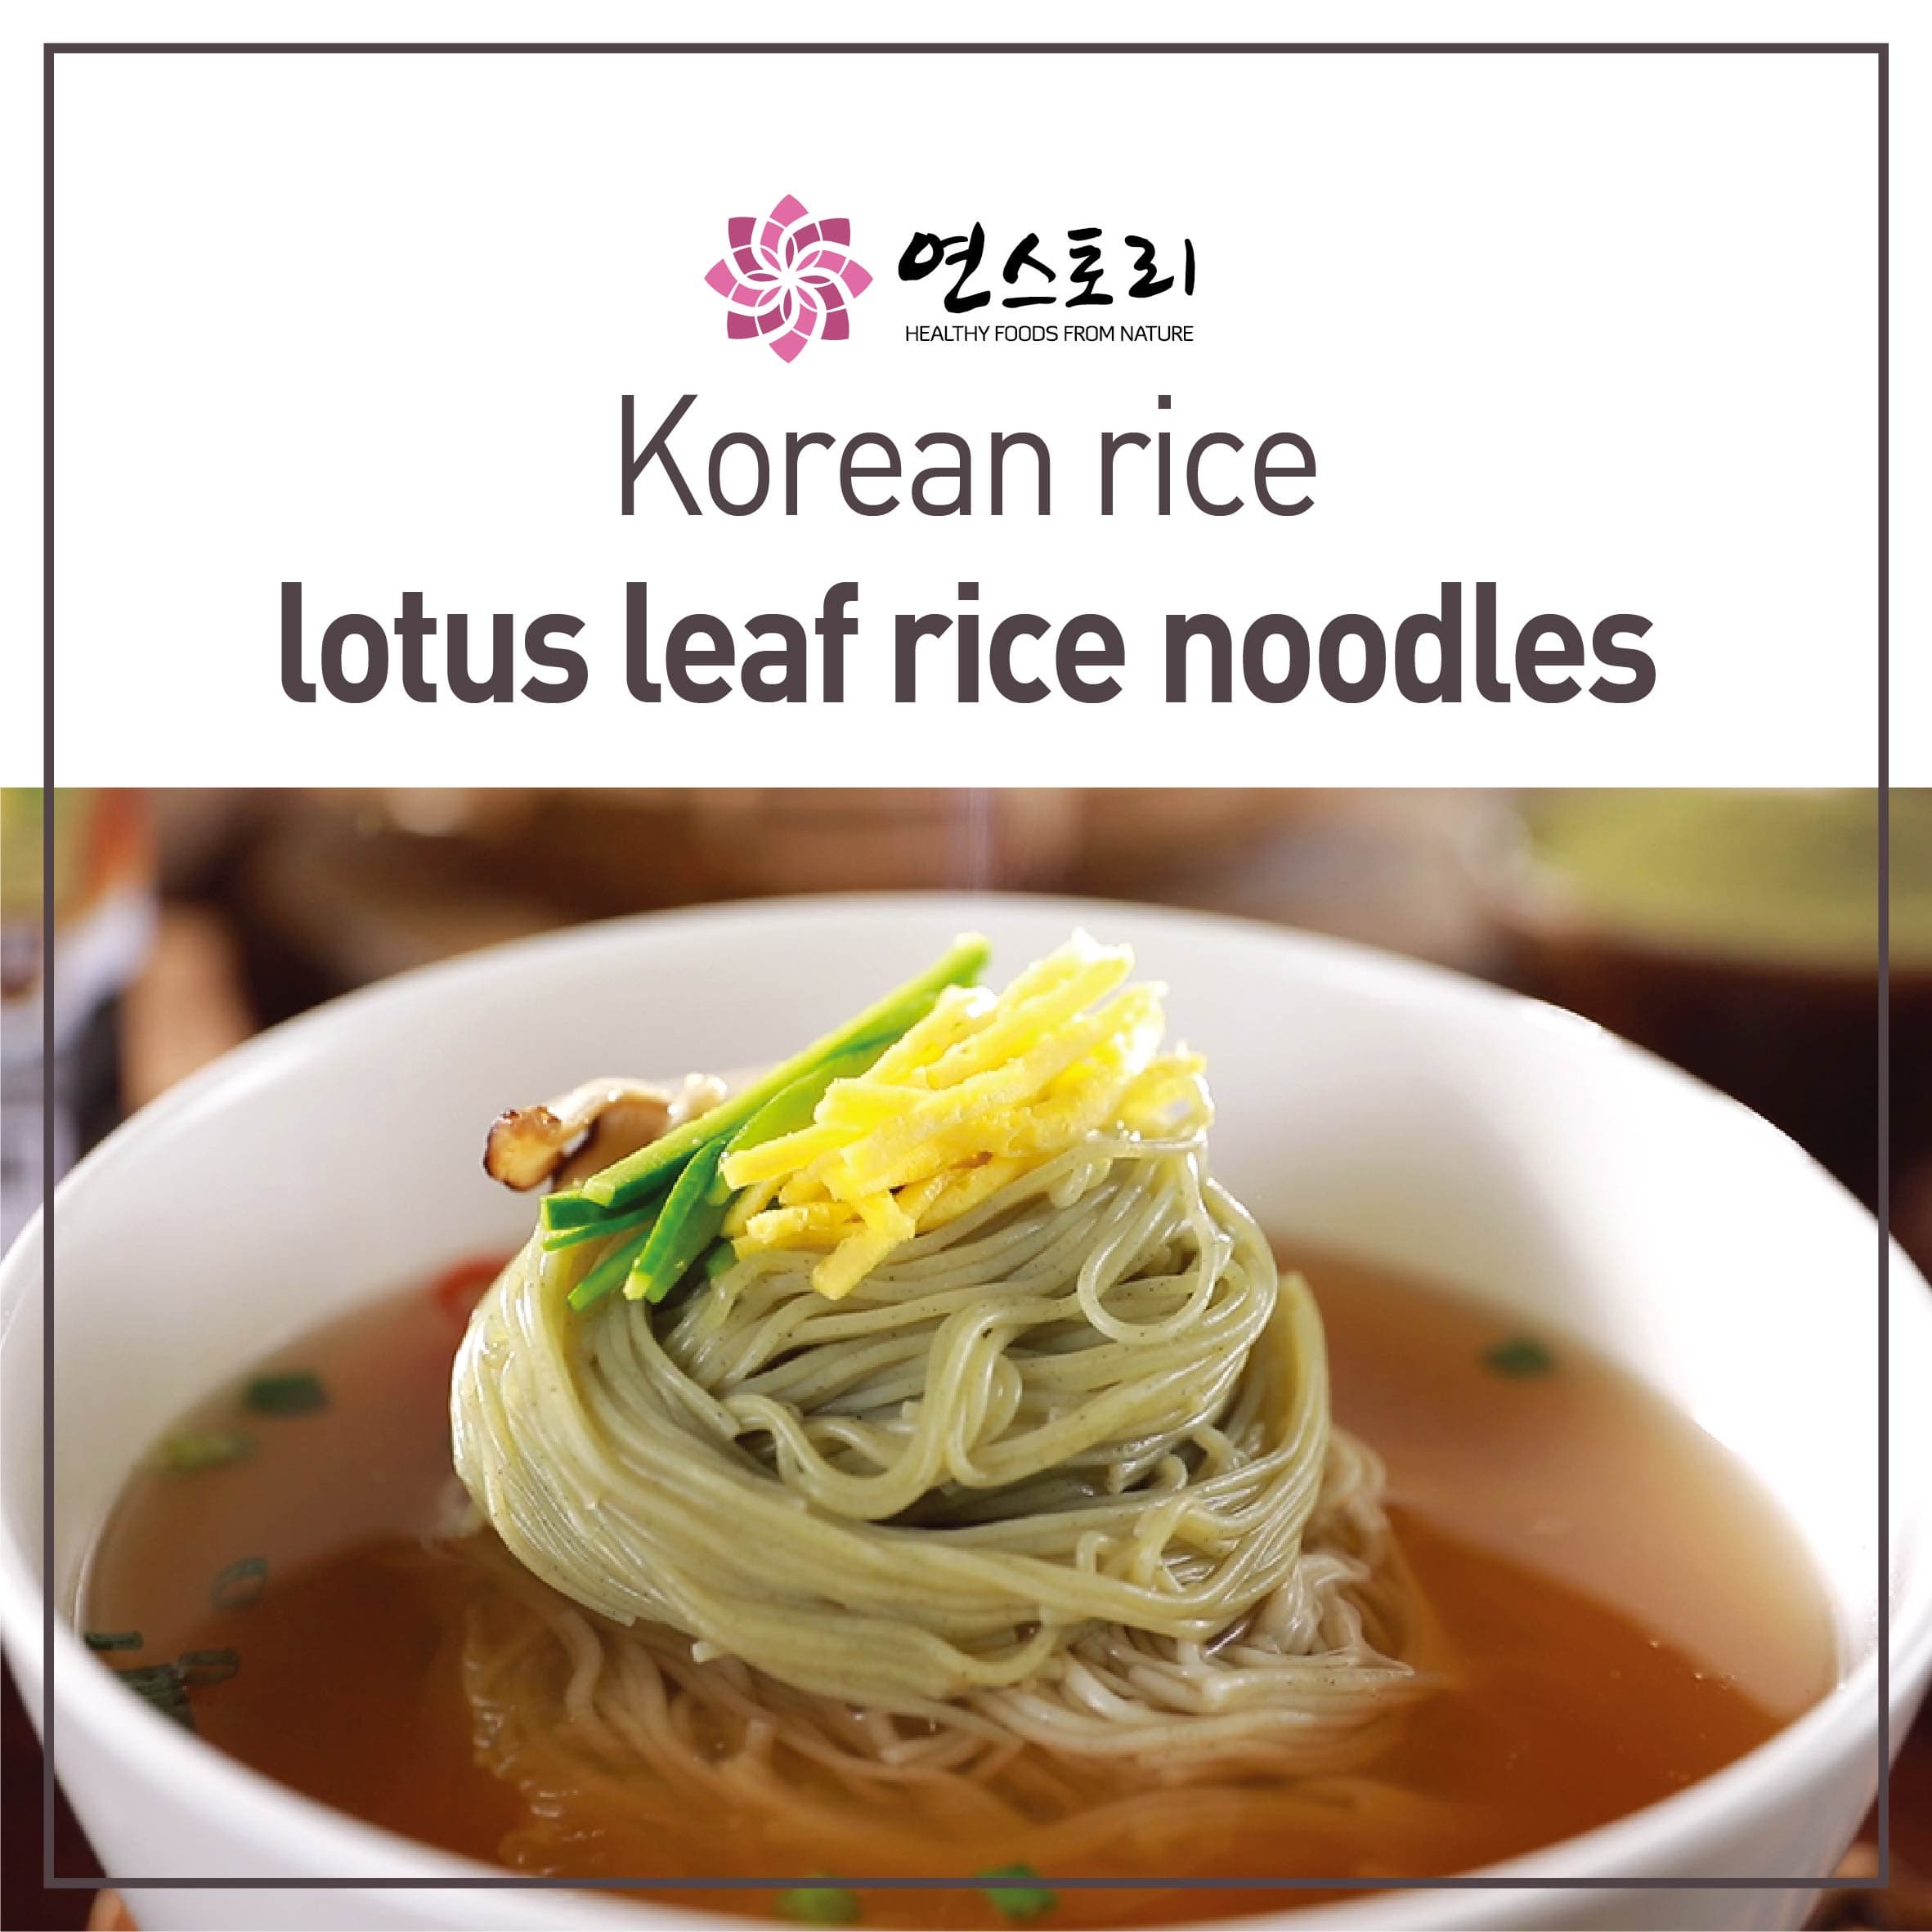 Quick Cook Rice Noodles containing Lotus Leaf powder